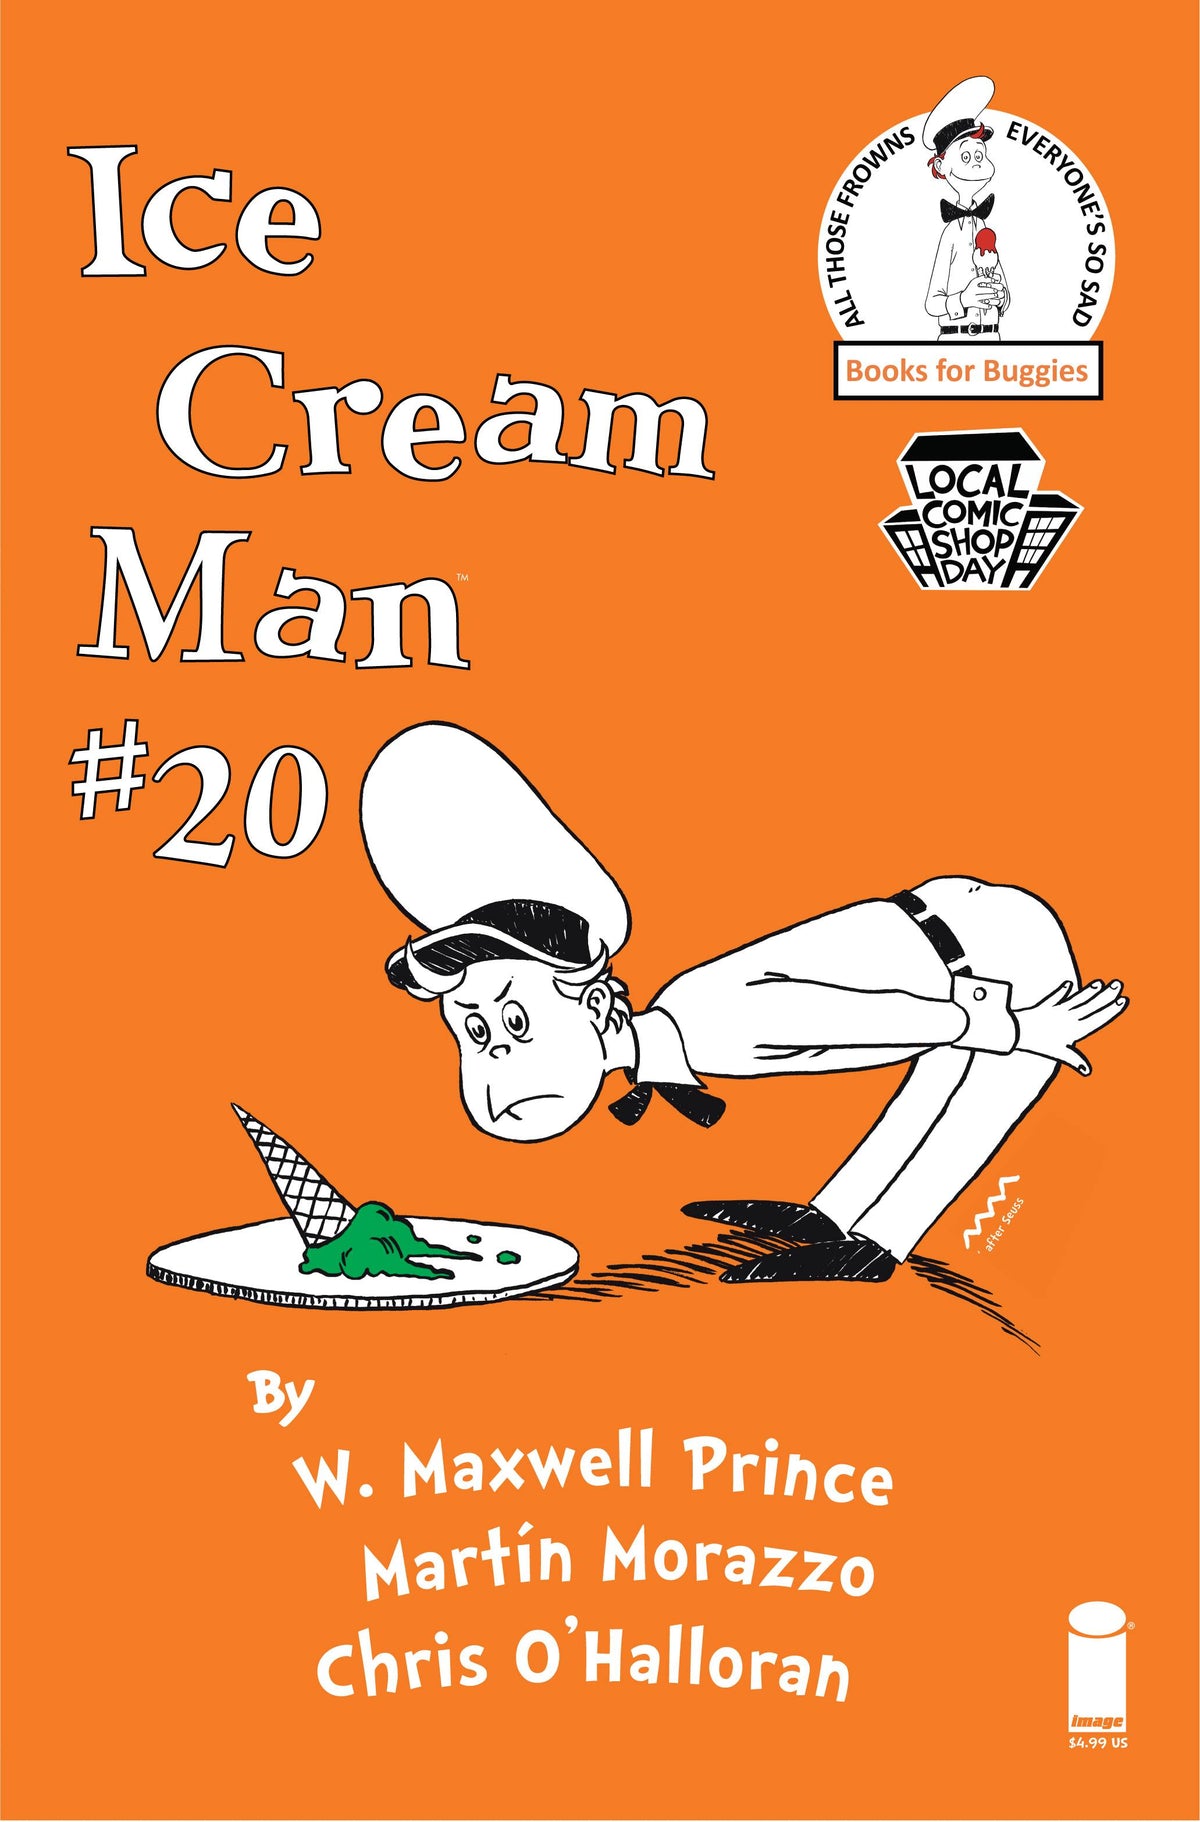 LCSD Ice Cream Man #20 (ONE PER CUSTOMER) - State of Comics